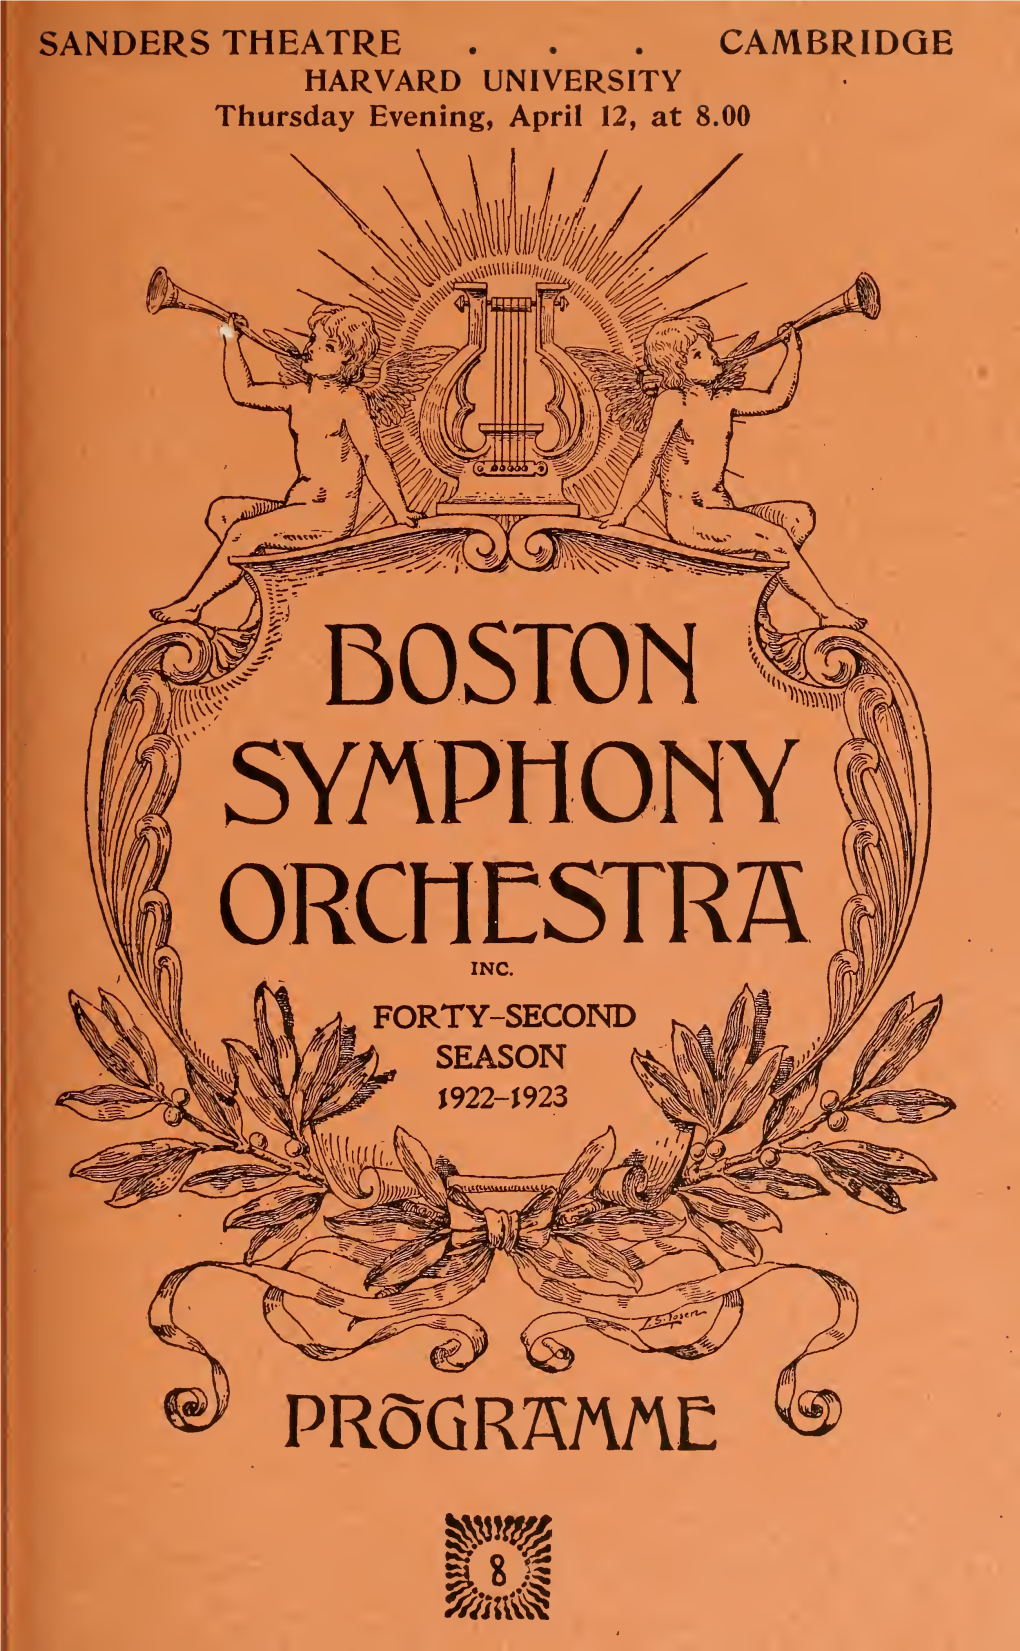 Boston Symphony Orchestra Concert Programs, Season 42,1922